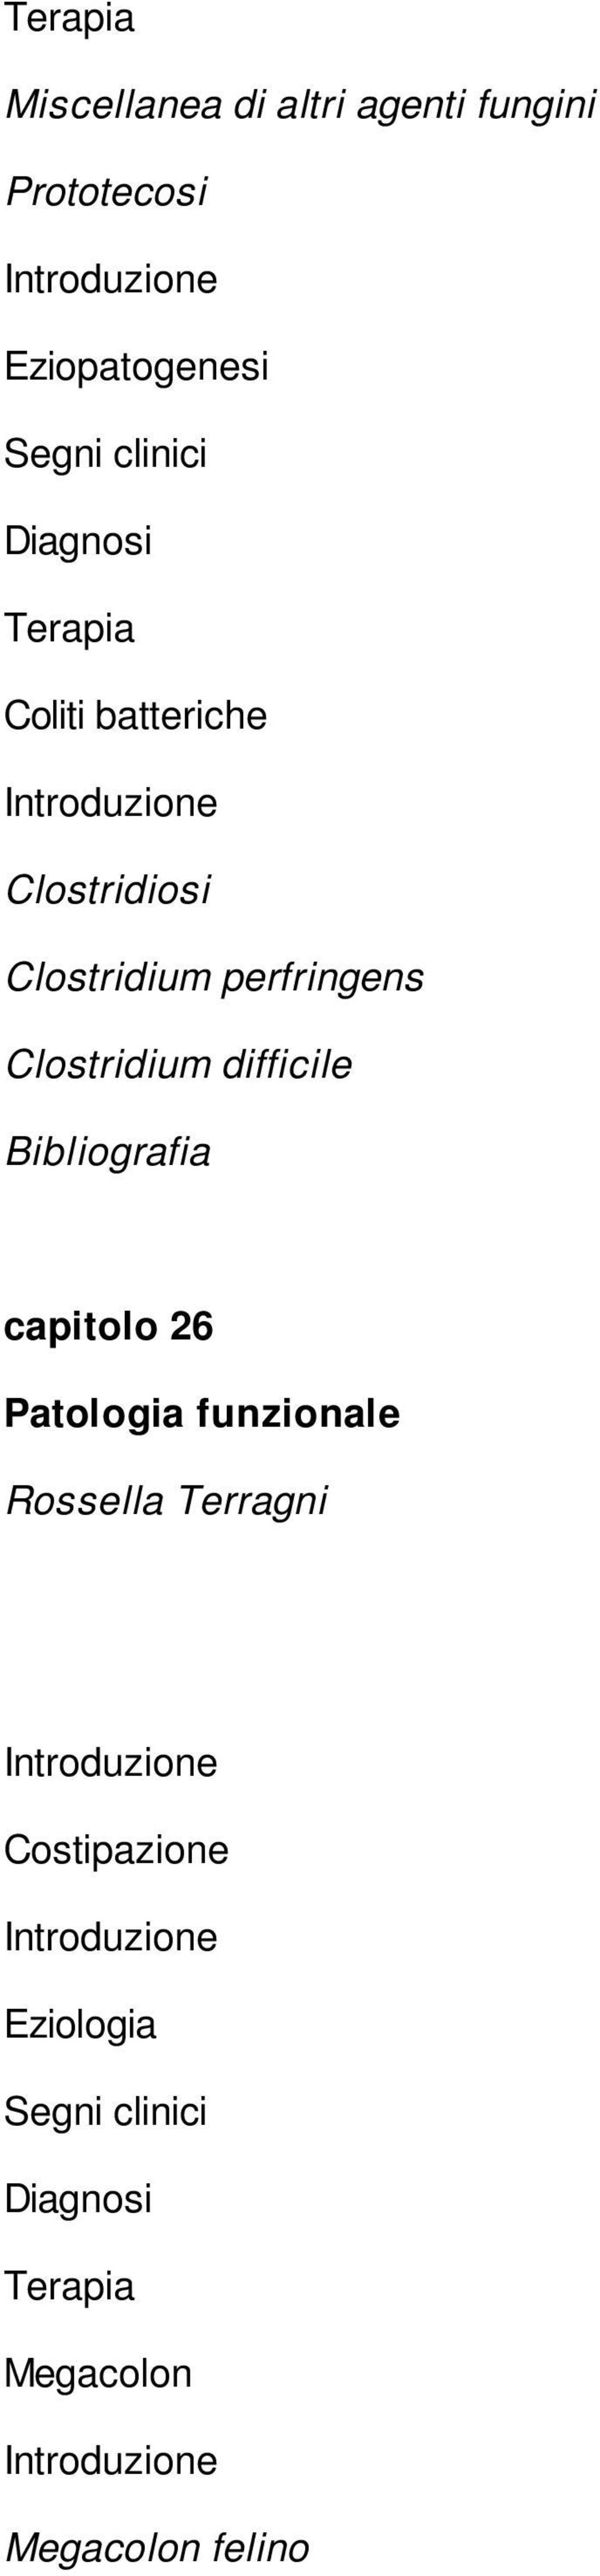 perfringens Clostridium difficile capitolo 26 Patologia